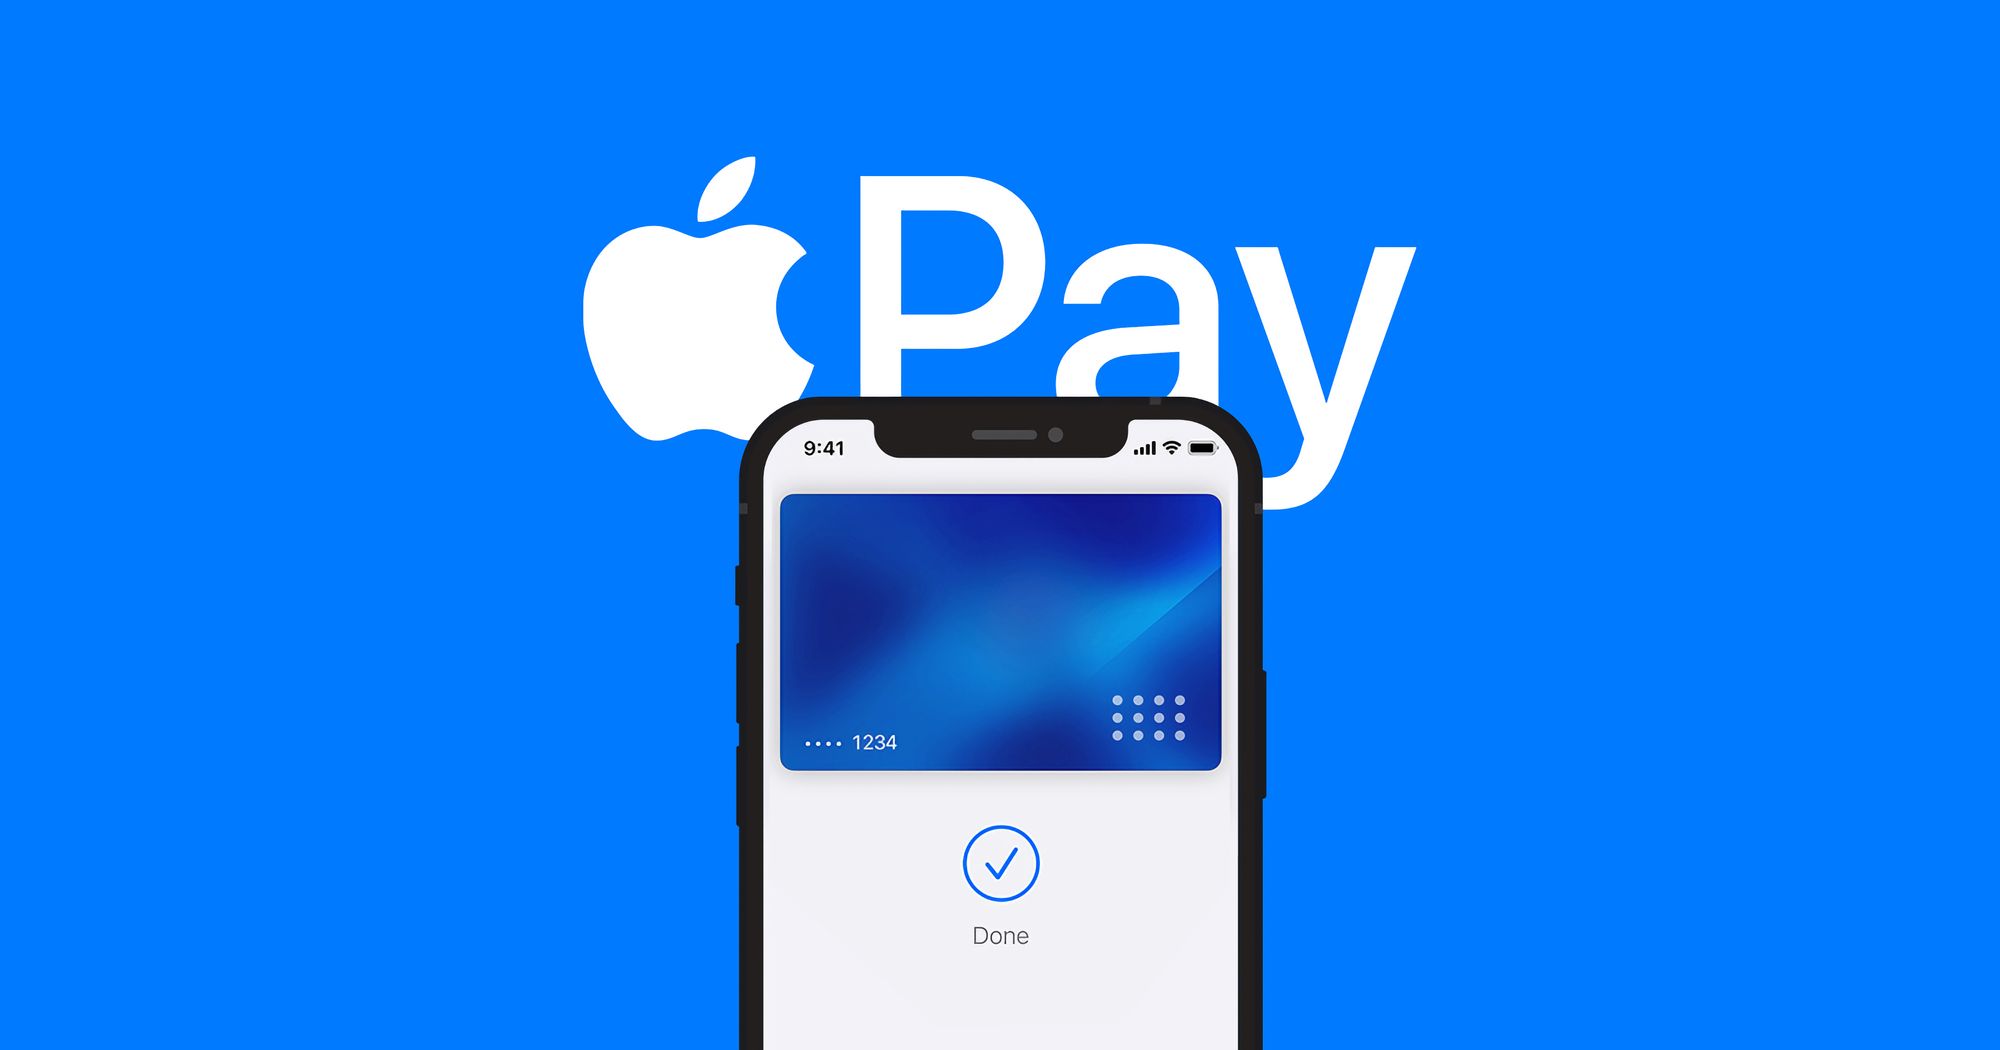 Aprende a configurar o Apple Pay no iPhone, Apple Watch e Mac post image